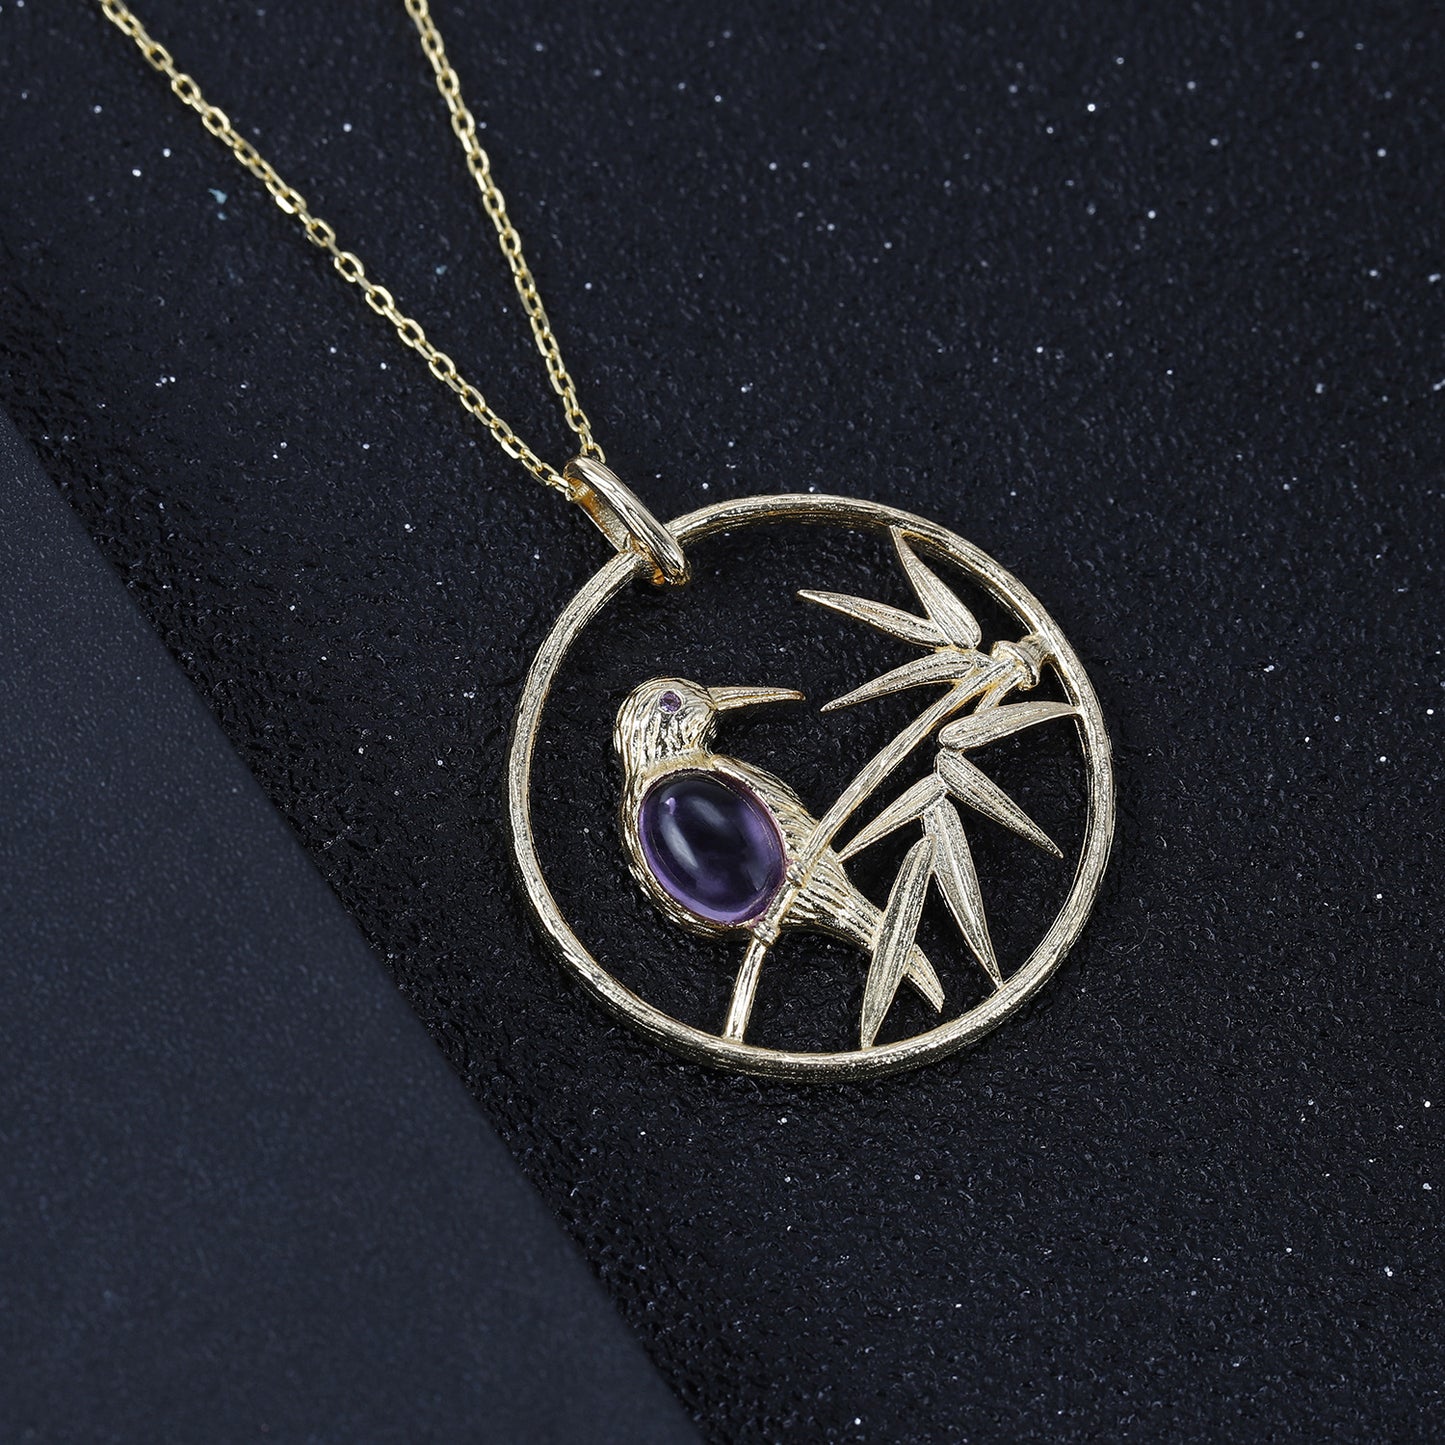 Premium Design Natural Amethyst Bird Circle Pendant Silver Necklace for Women